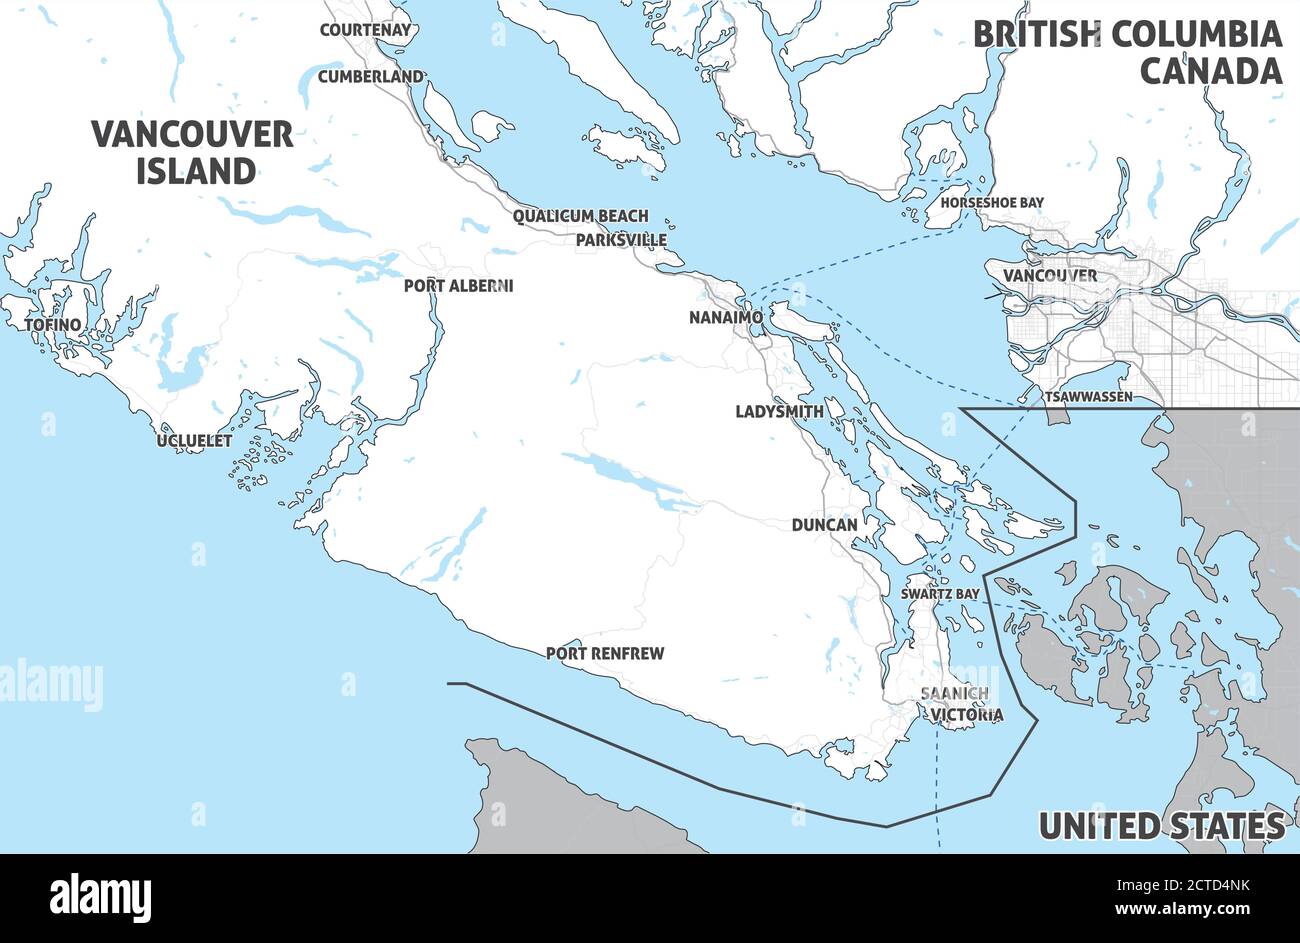 Karte von Vancouver Island (Nanaimo, Victoria, Tofino) und Greater Vancouver. Kanada, British Columbia. Einfache Karte mit optimierten Formen. Stock Vektor